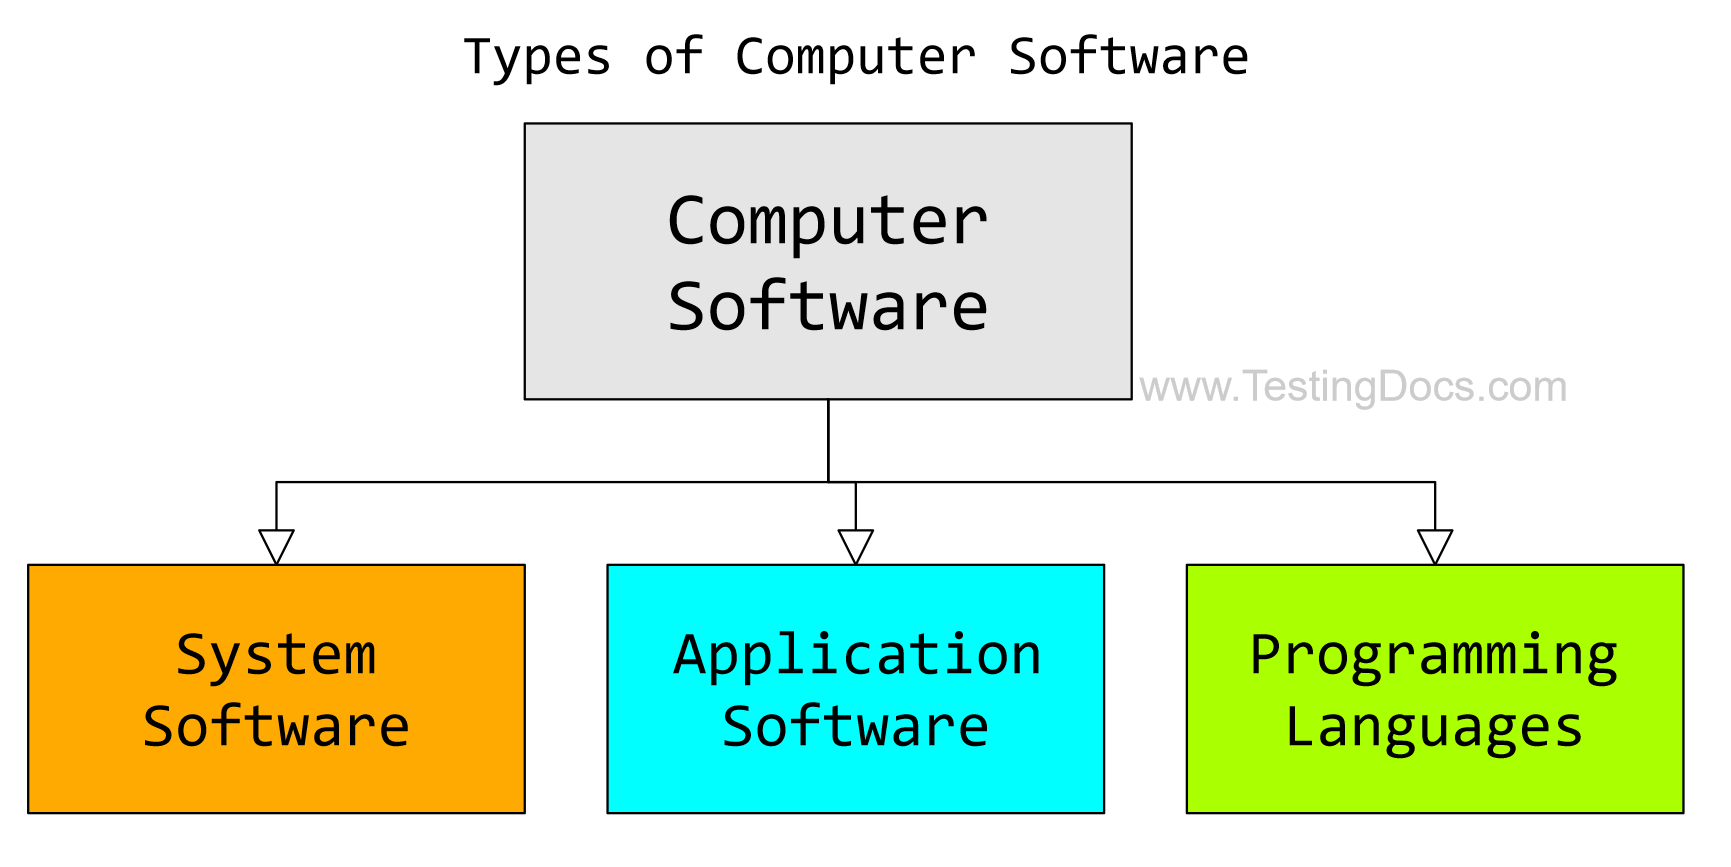 Types of Computer Software | TestingDocs.com